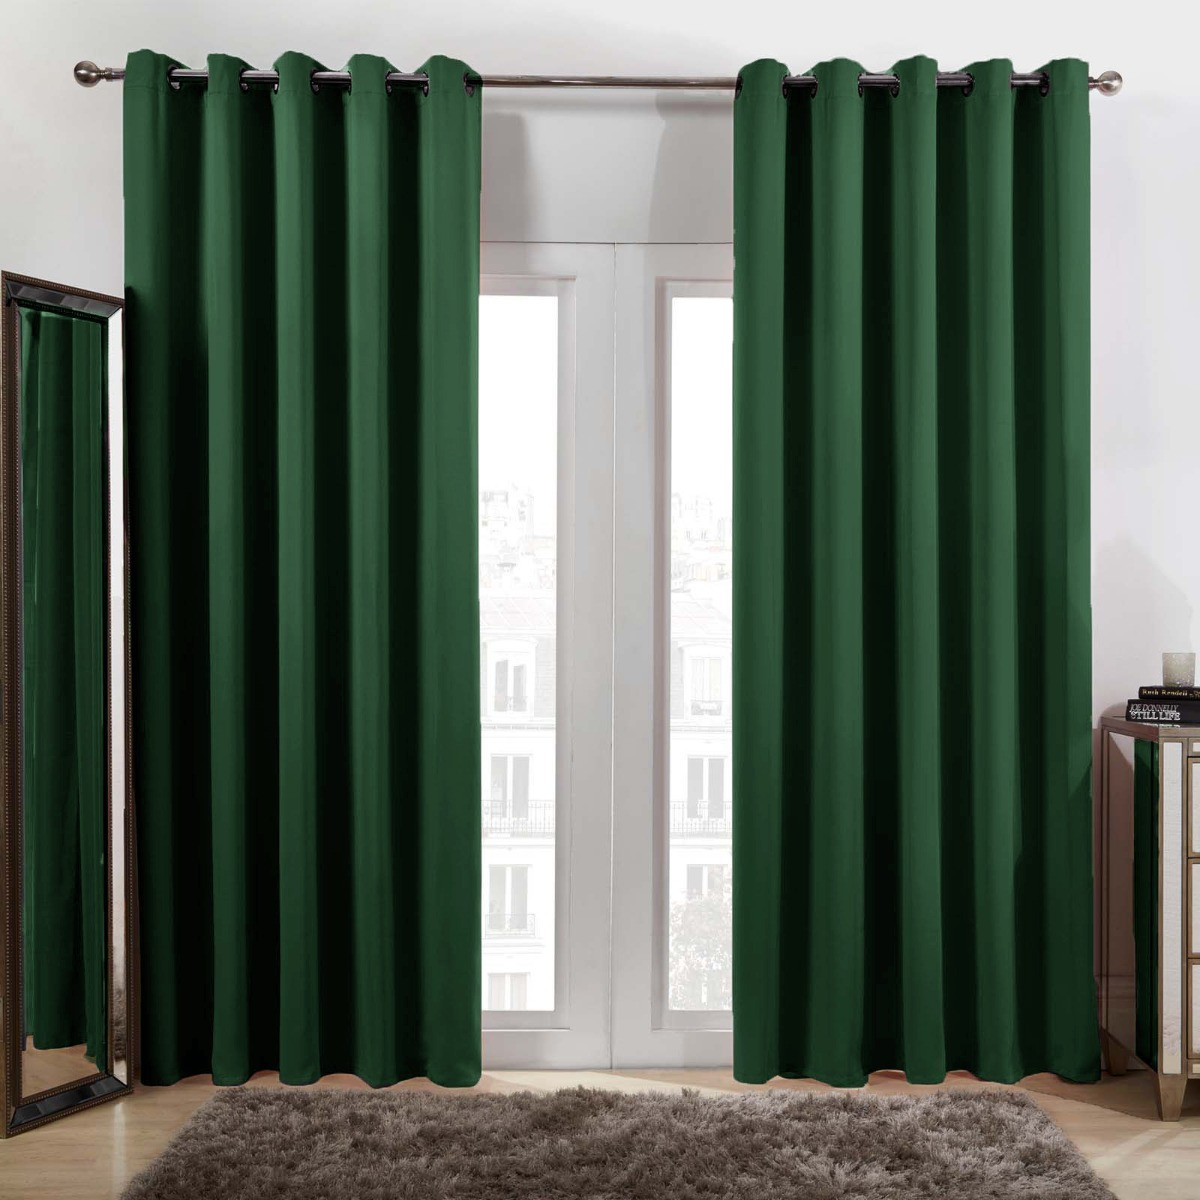 Dreamscene Eyelet Blackout Curtains, Forest Green - 117 x 137cm (46" x 54")>